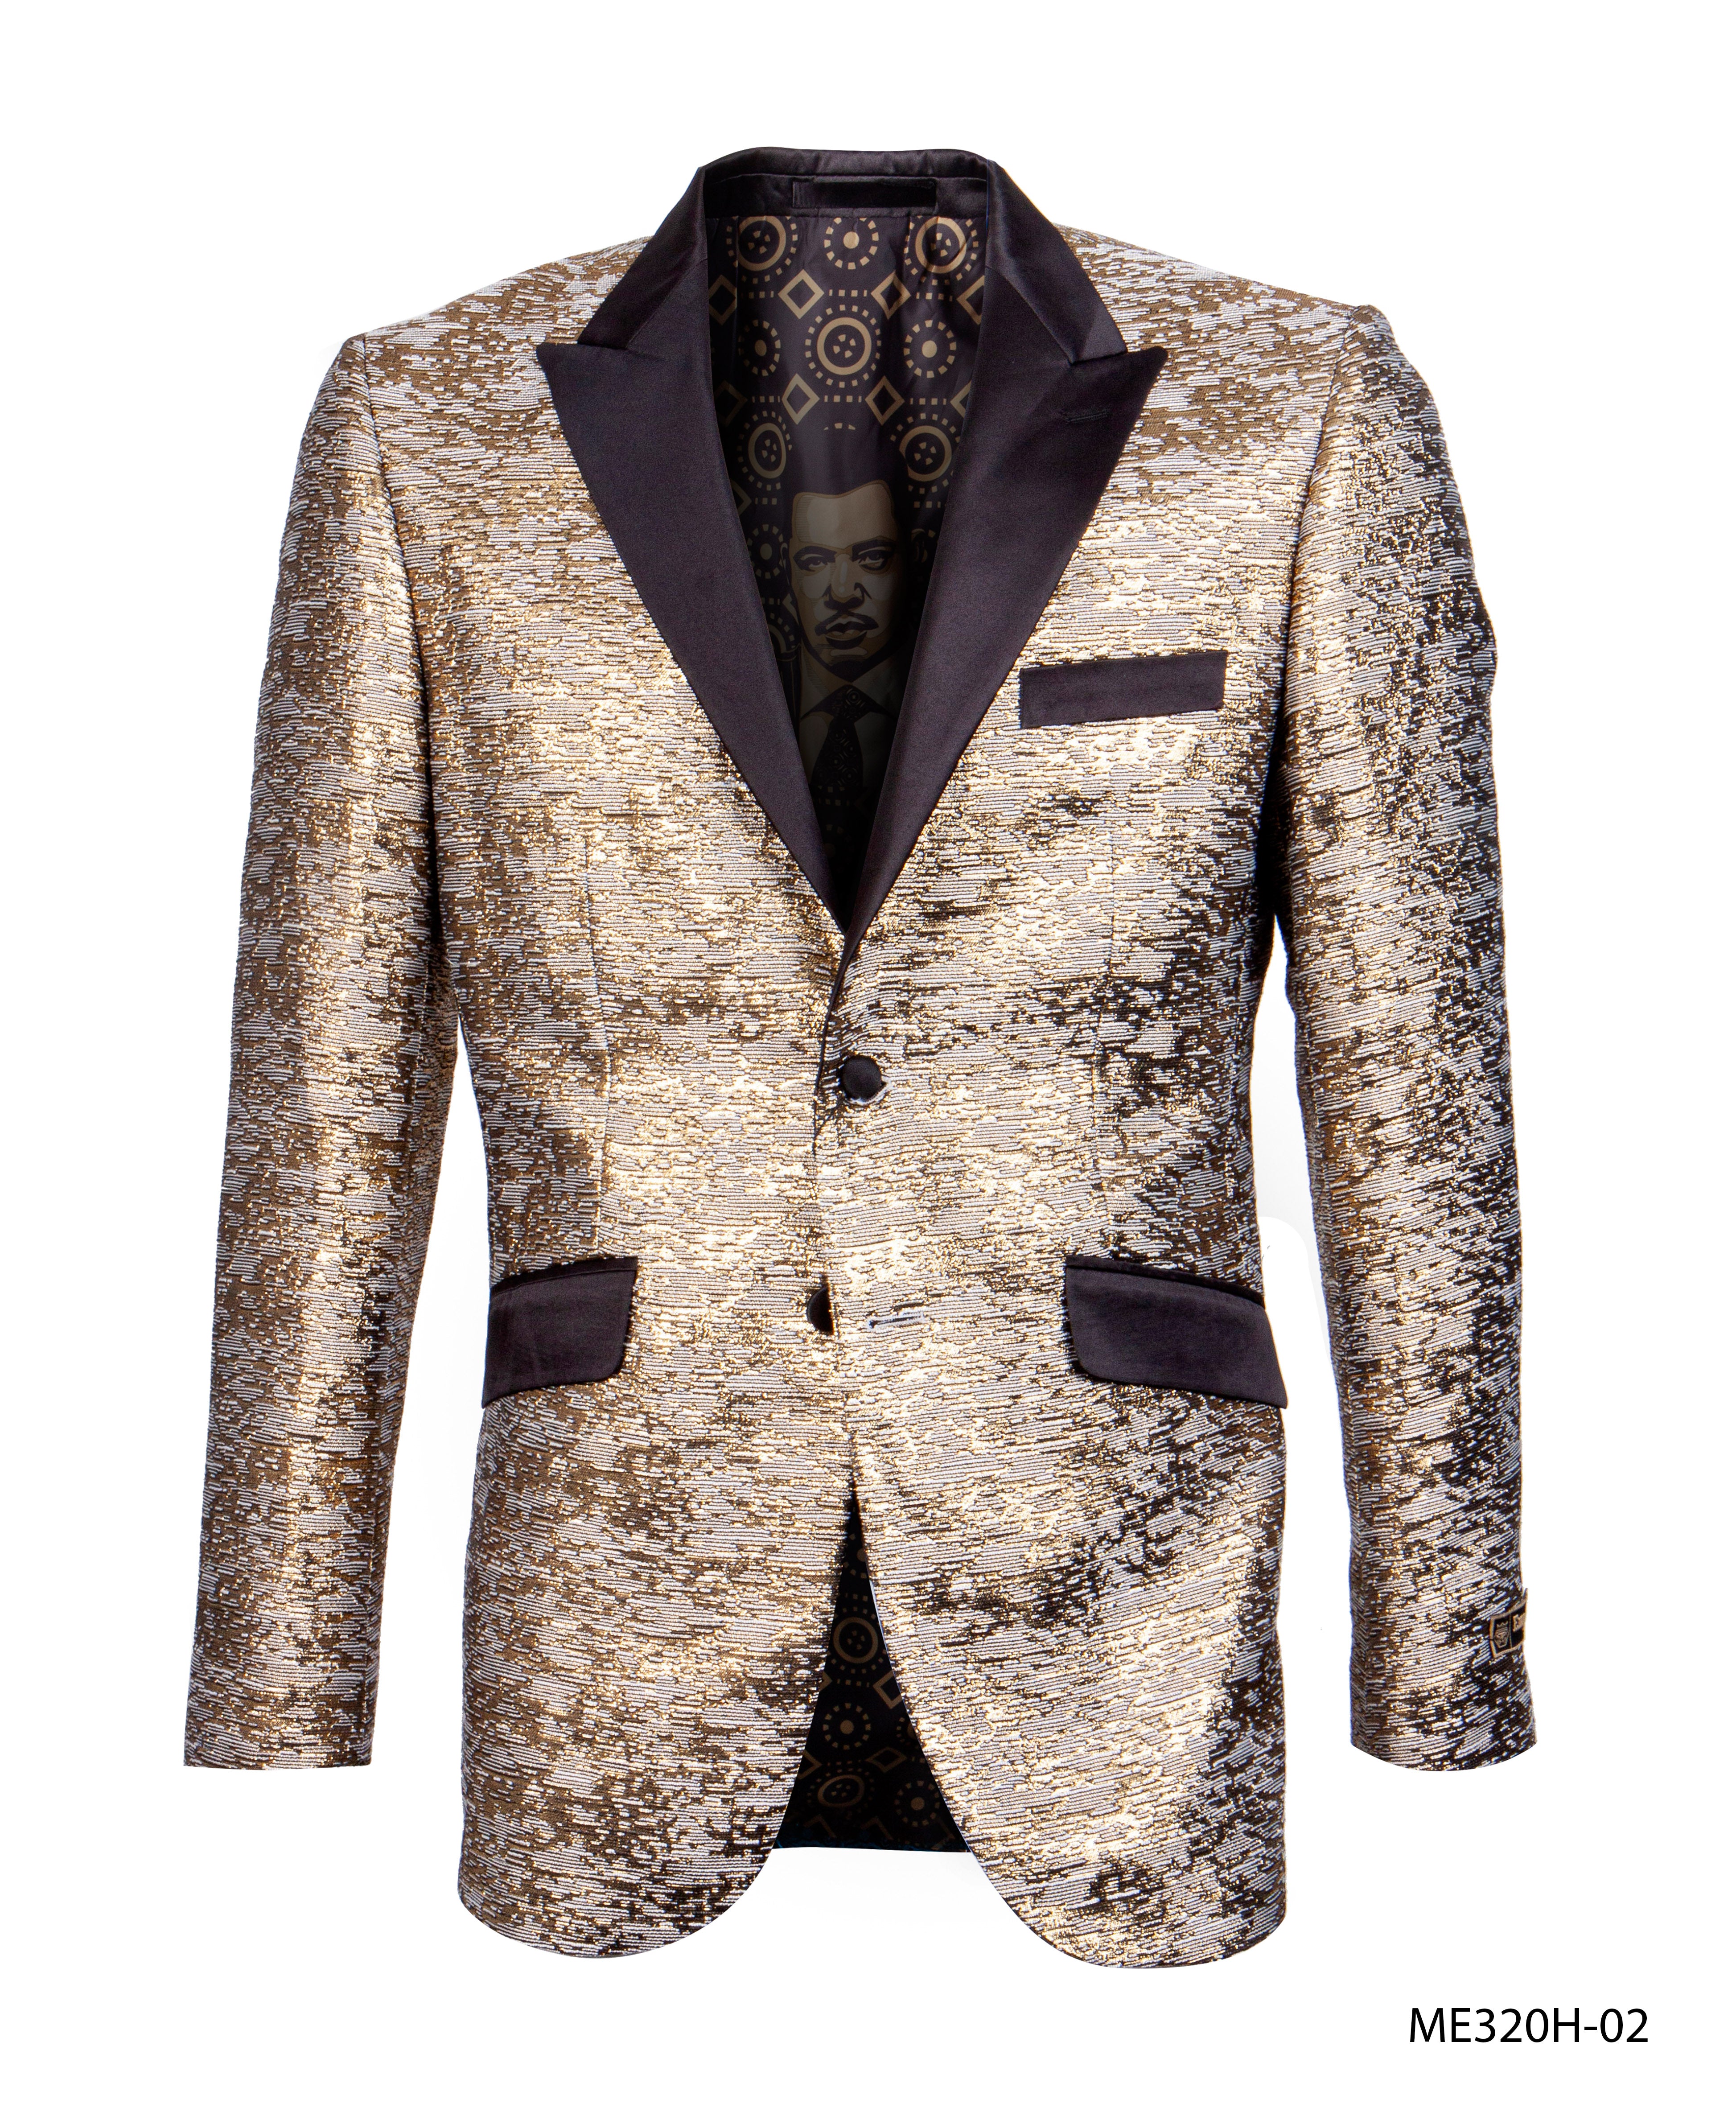 Copper/Black Empire Show Blazers Formal Dinner Suit Jackets For Men ME320H-02